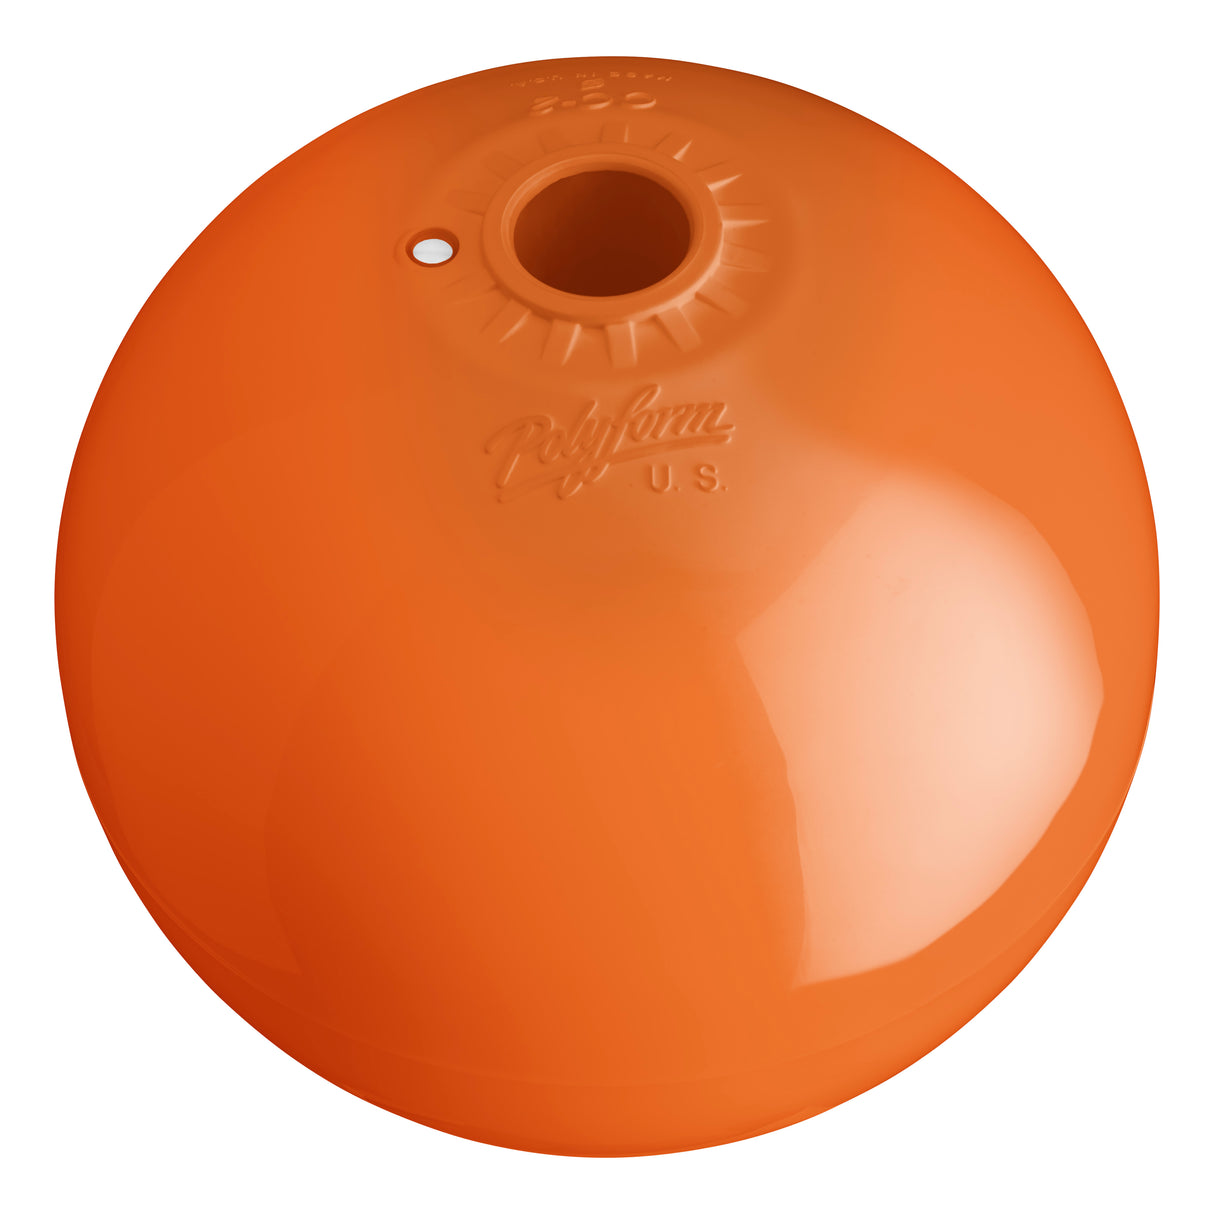 Hole through center mooring and marker buoy, Polyform CC-2 International Orange angled shot